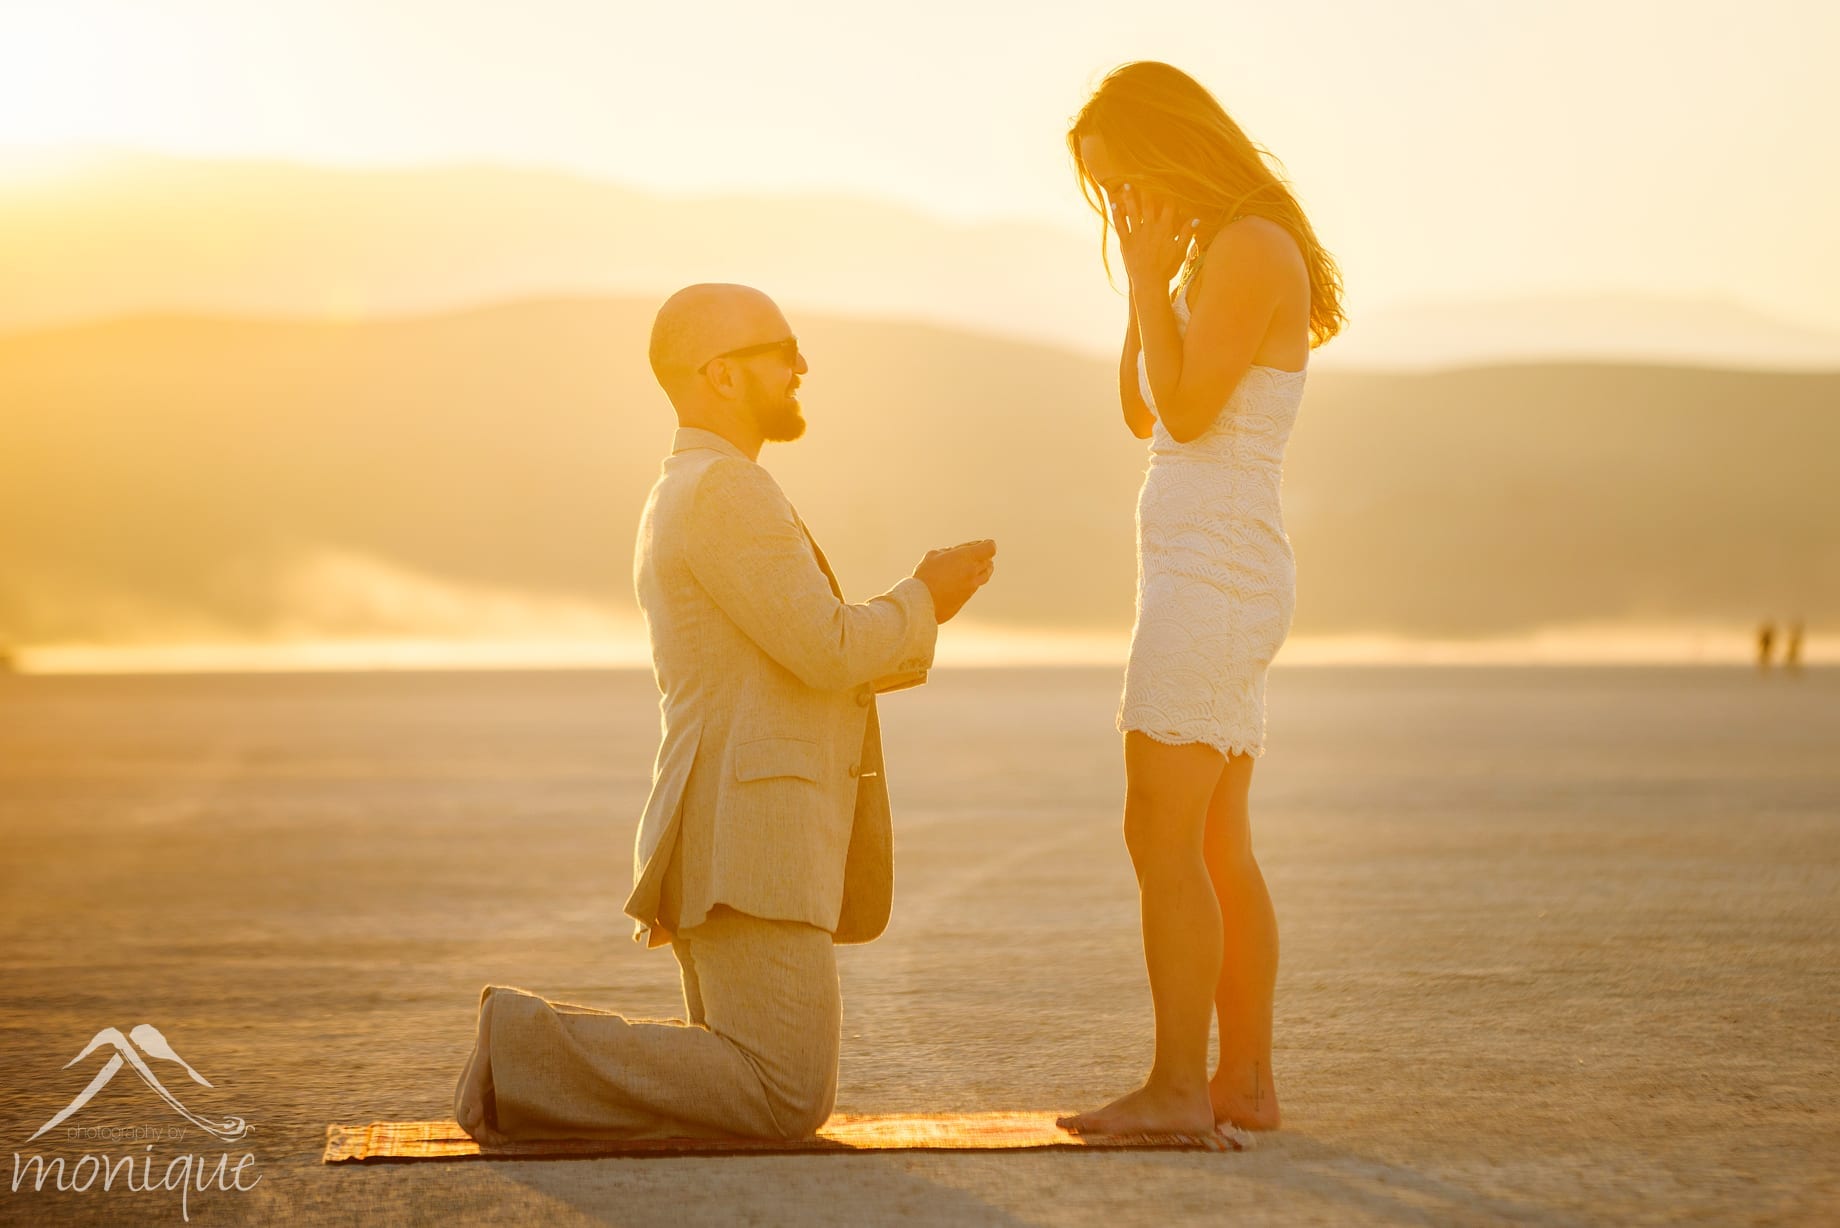 Burning Man 2018 engagement photography, sunset on the playa, surprise ring proposal